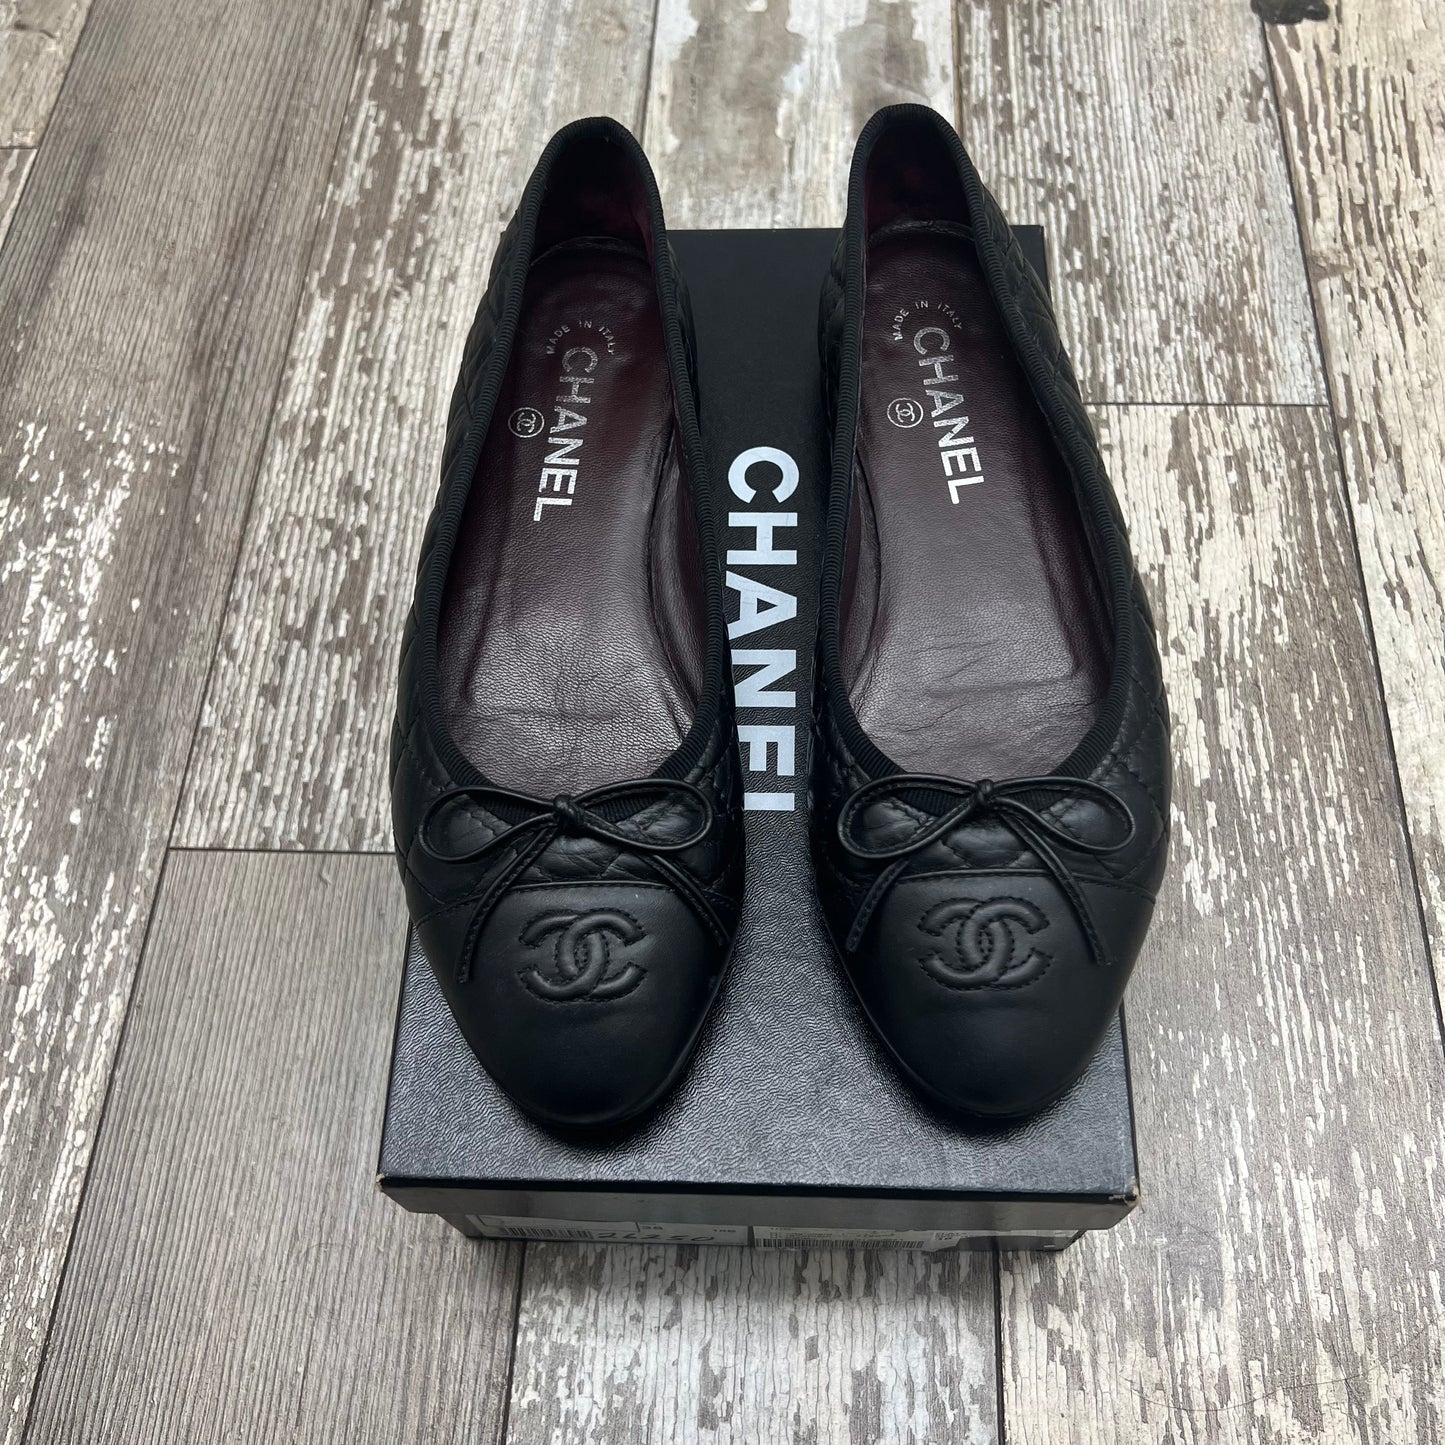 Chanel Ballerina Flats Size 38